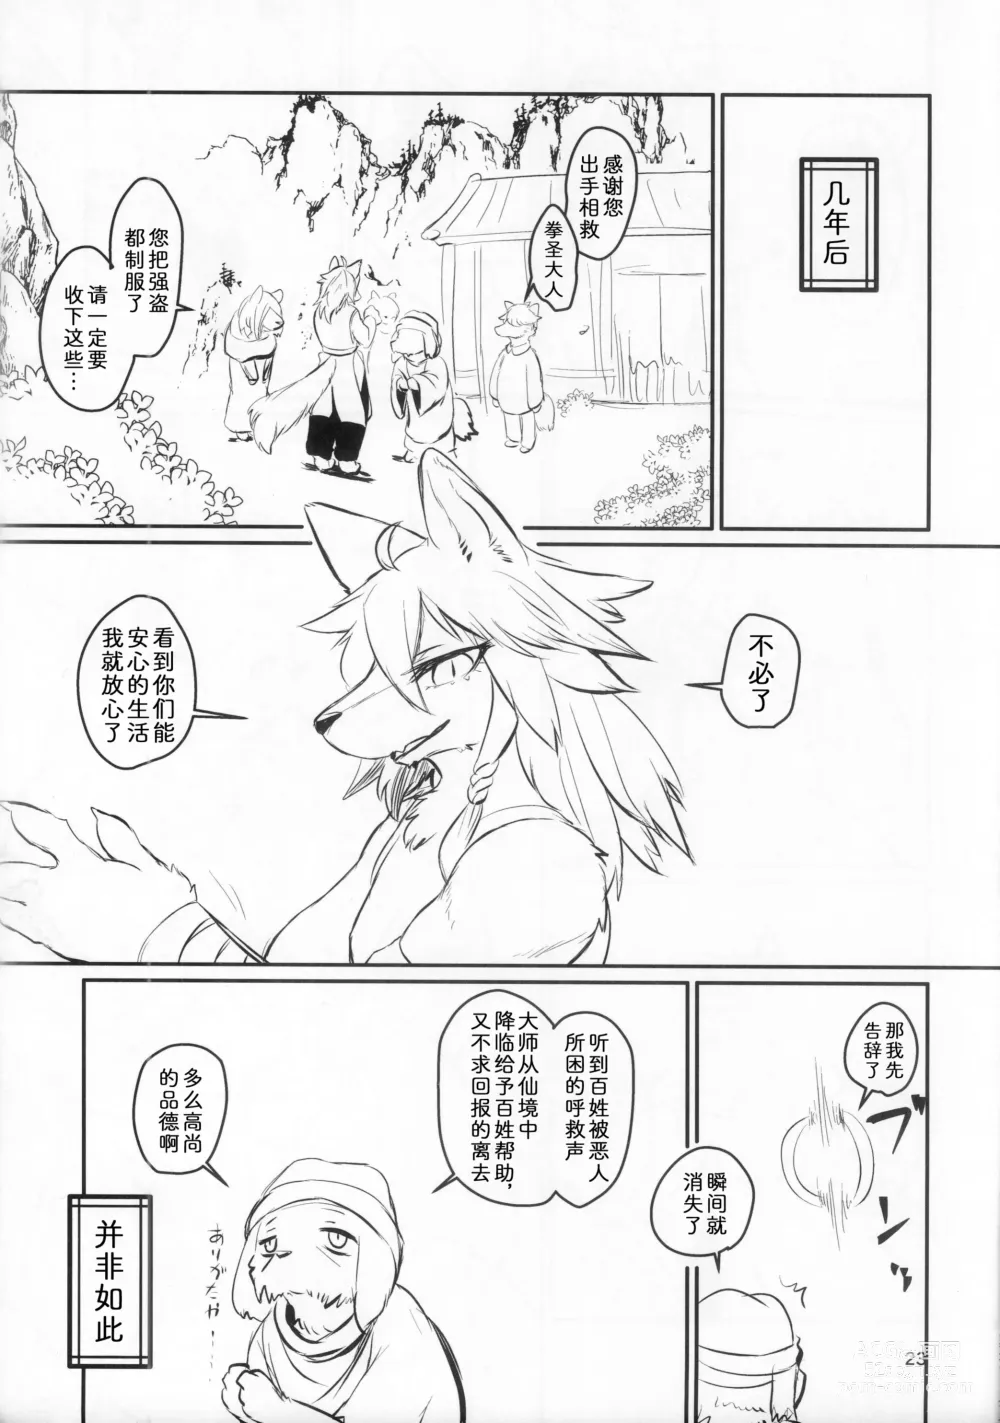 Page 22 of doujinshi 娇声，幽谷飘香